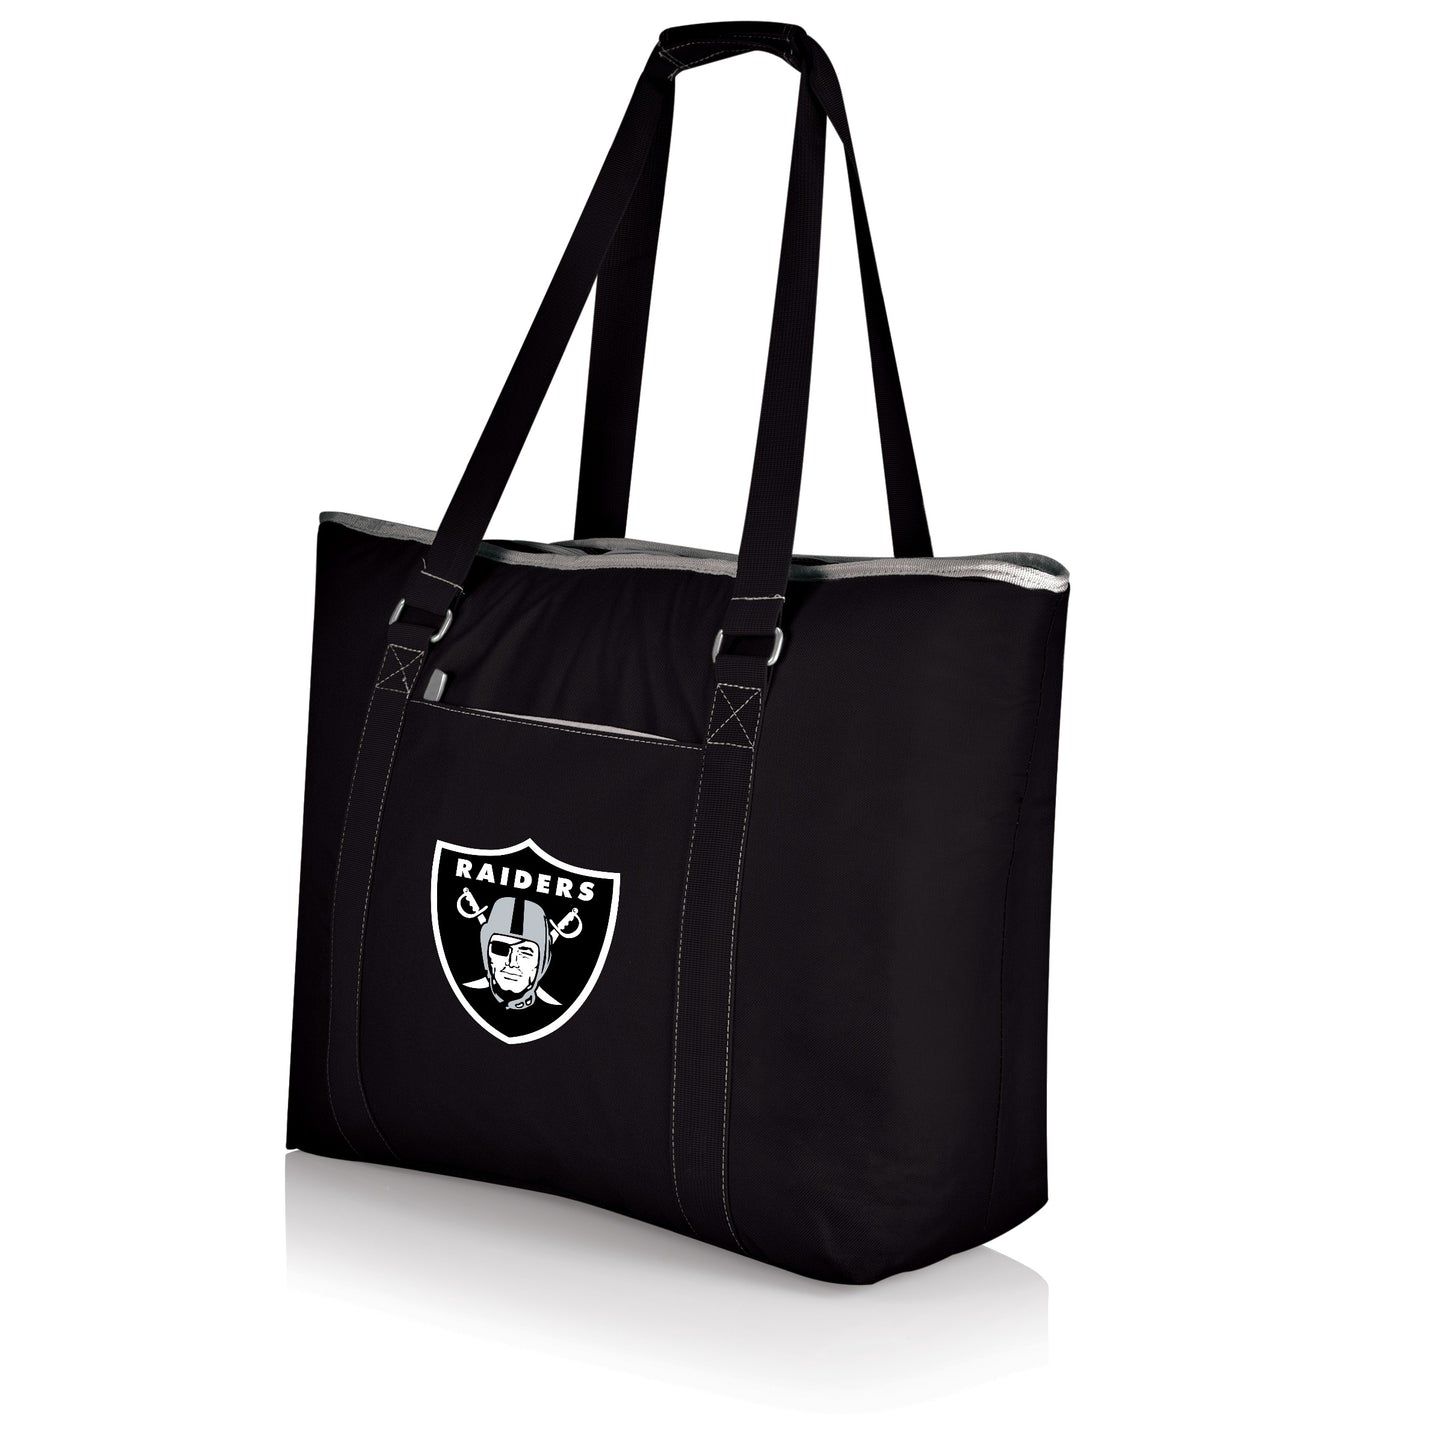 Las Vegas Raiders Tahoe XL Cooler Tote Bag, (Black)